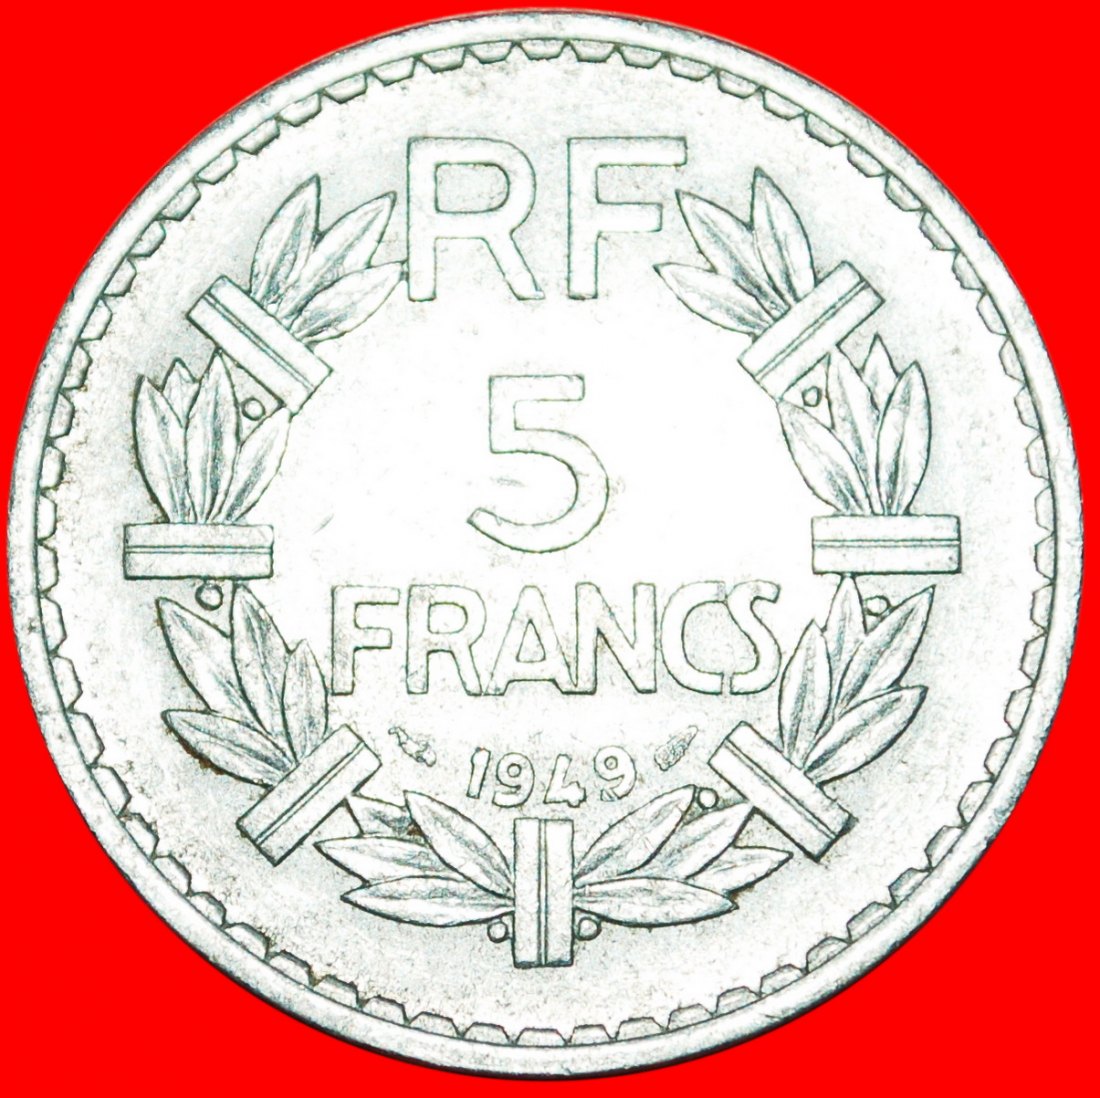  * CLOSED 9: FRANCE ★ 5 FRANCS 1949! LOW START ★ NO RESERVE!   